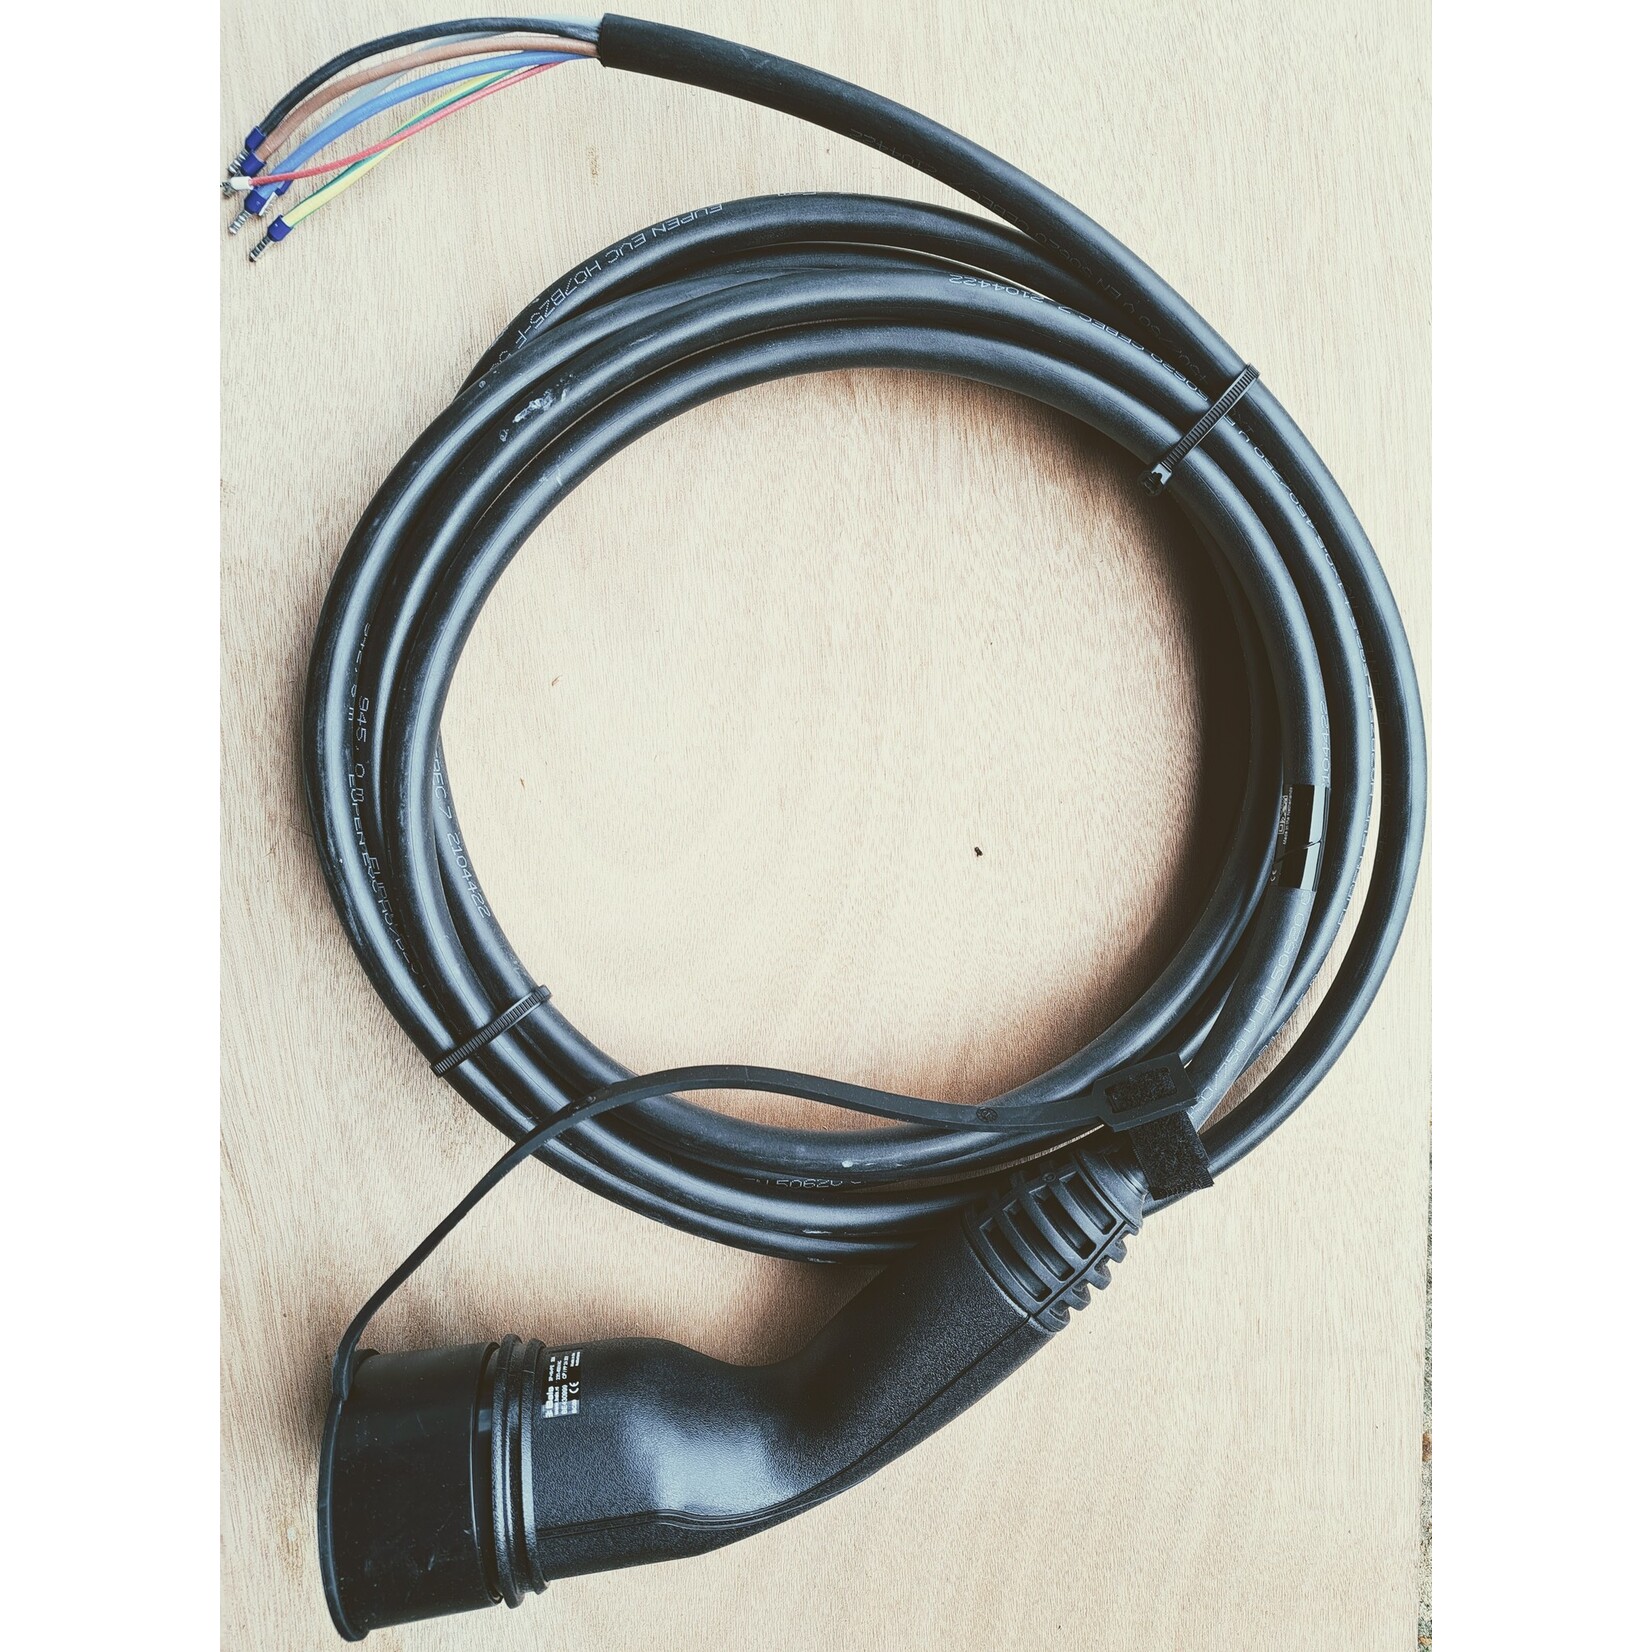 Kabel laadpunt 5 m 1 fase  20A  stekker type 2